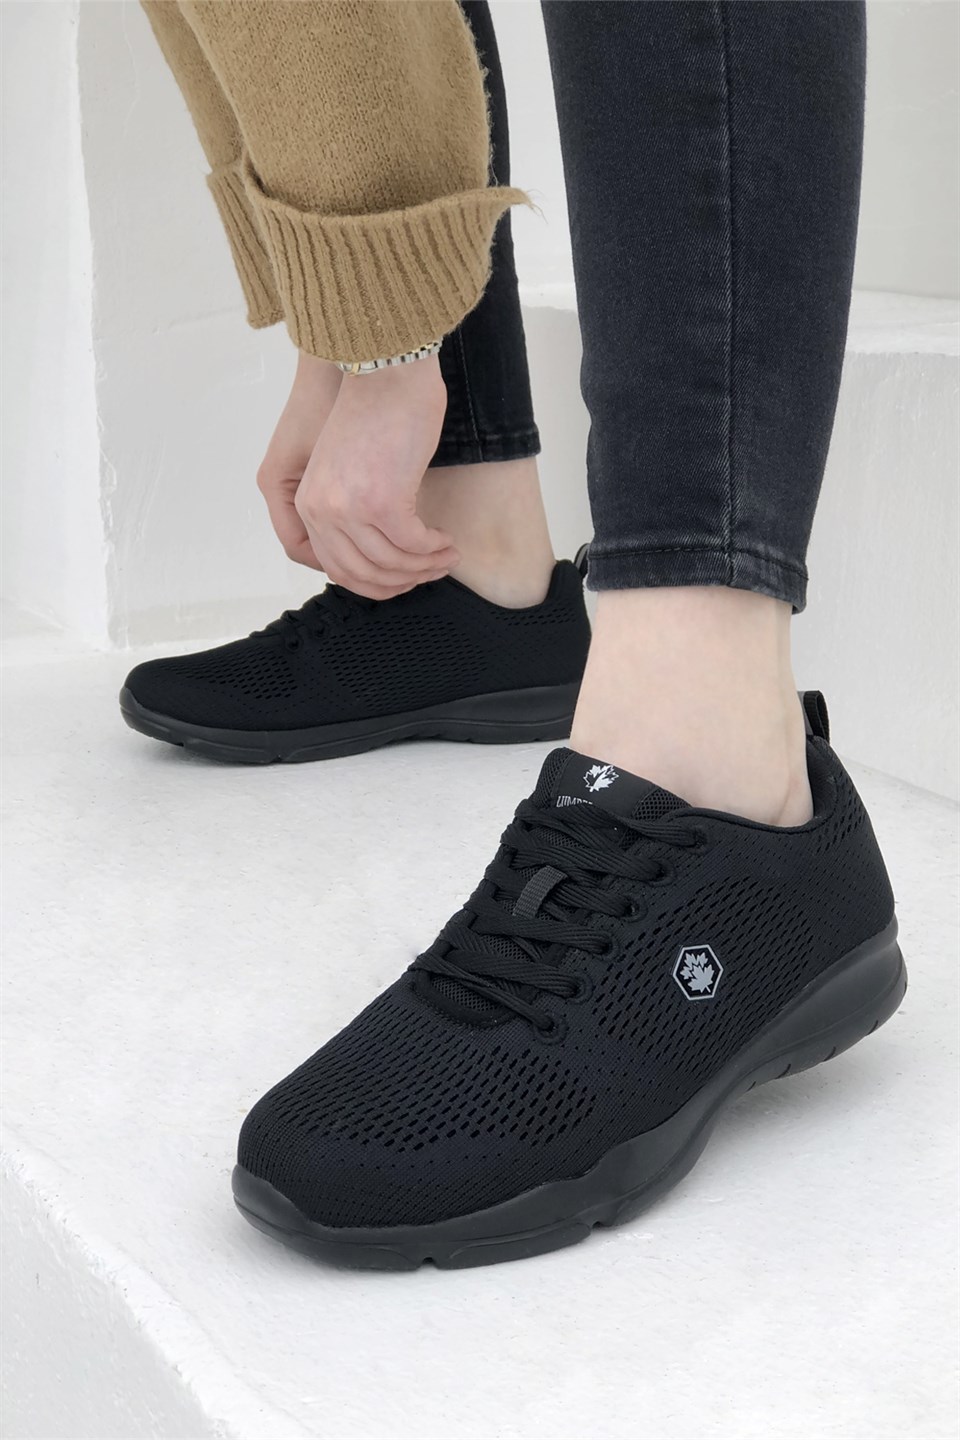 Nefes Alır Bağcıklı Unisex Spor Ayakkabı Siyah Siyah LUMBERJACK AGATHA | My  Bella Shoes